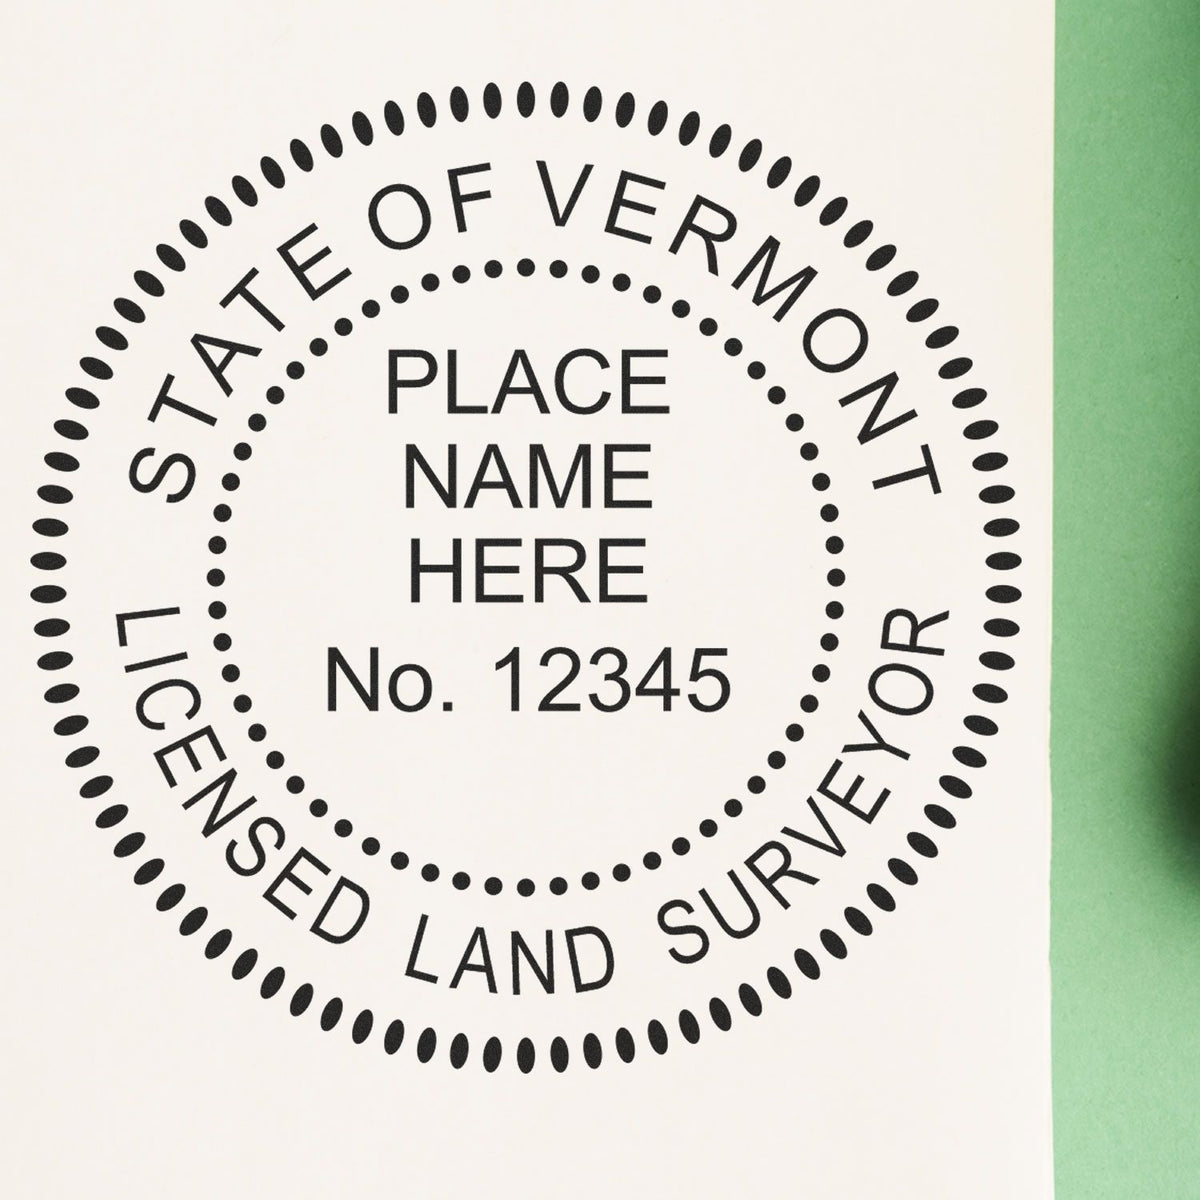 Vermont Land Surveyor Seal Stamp In Use Photo